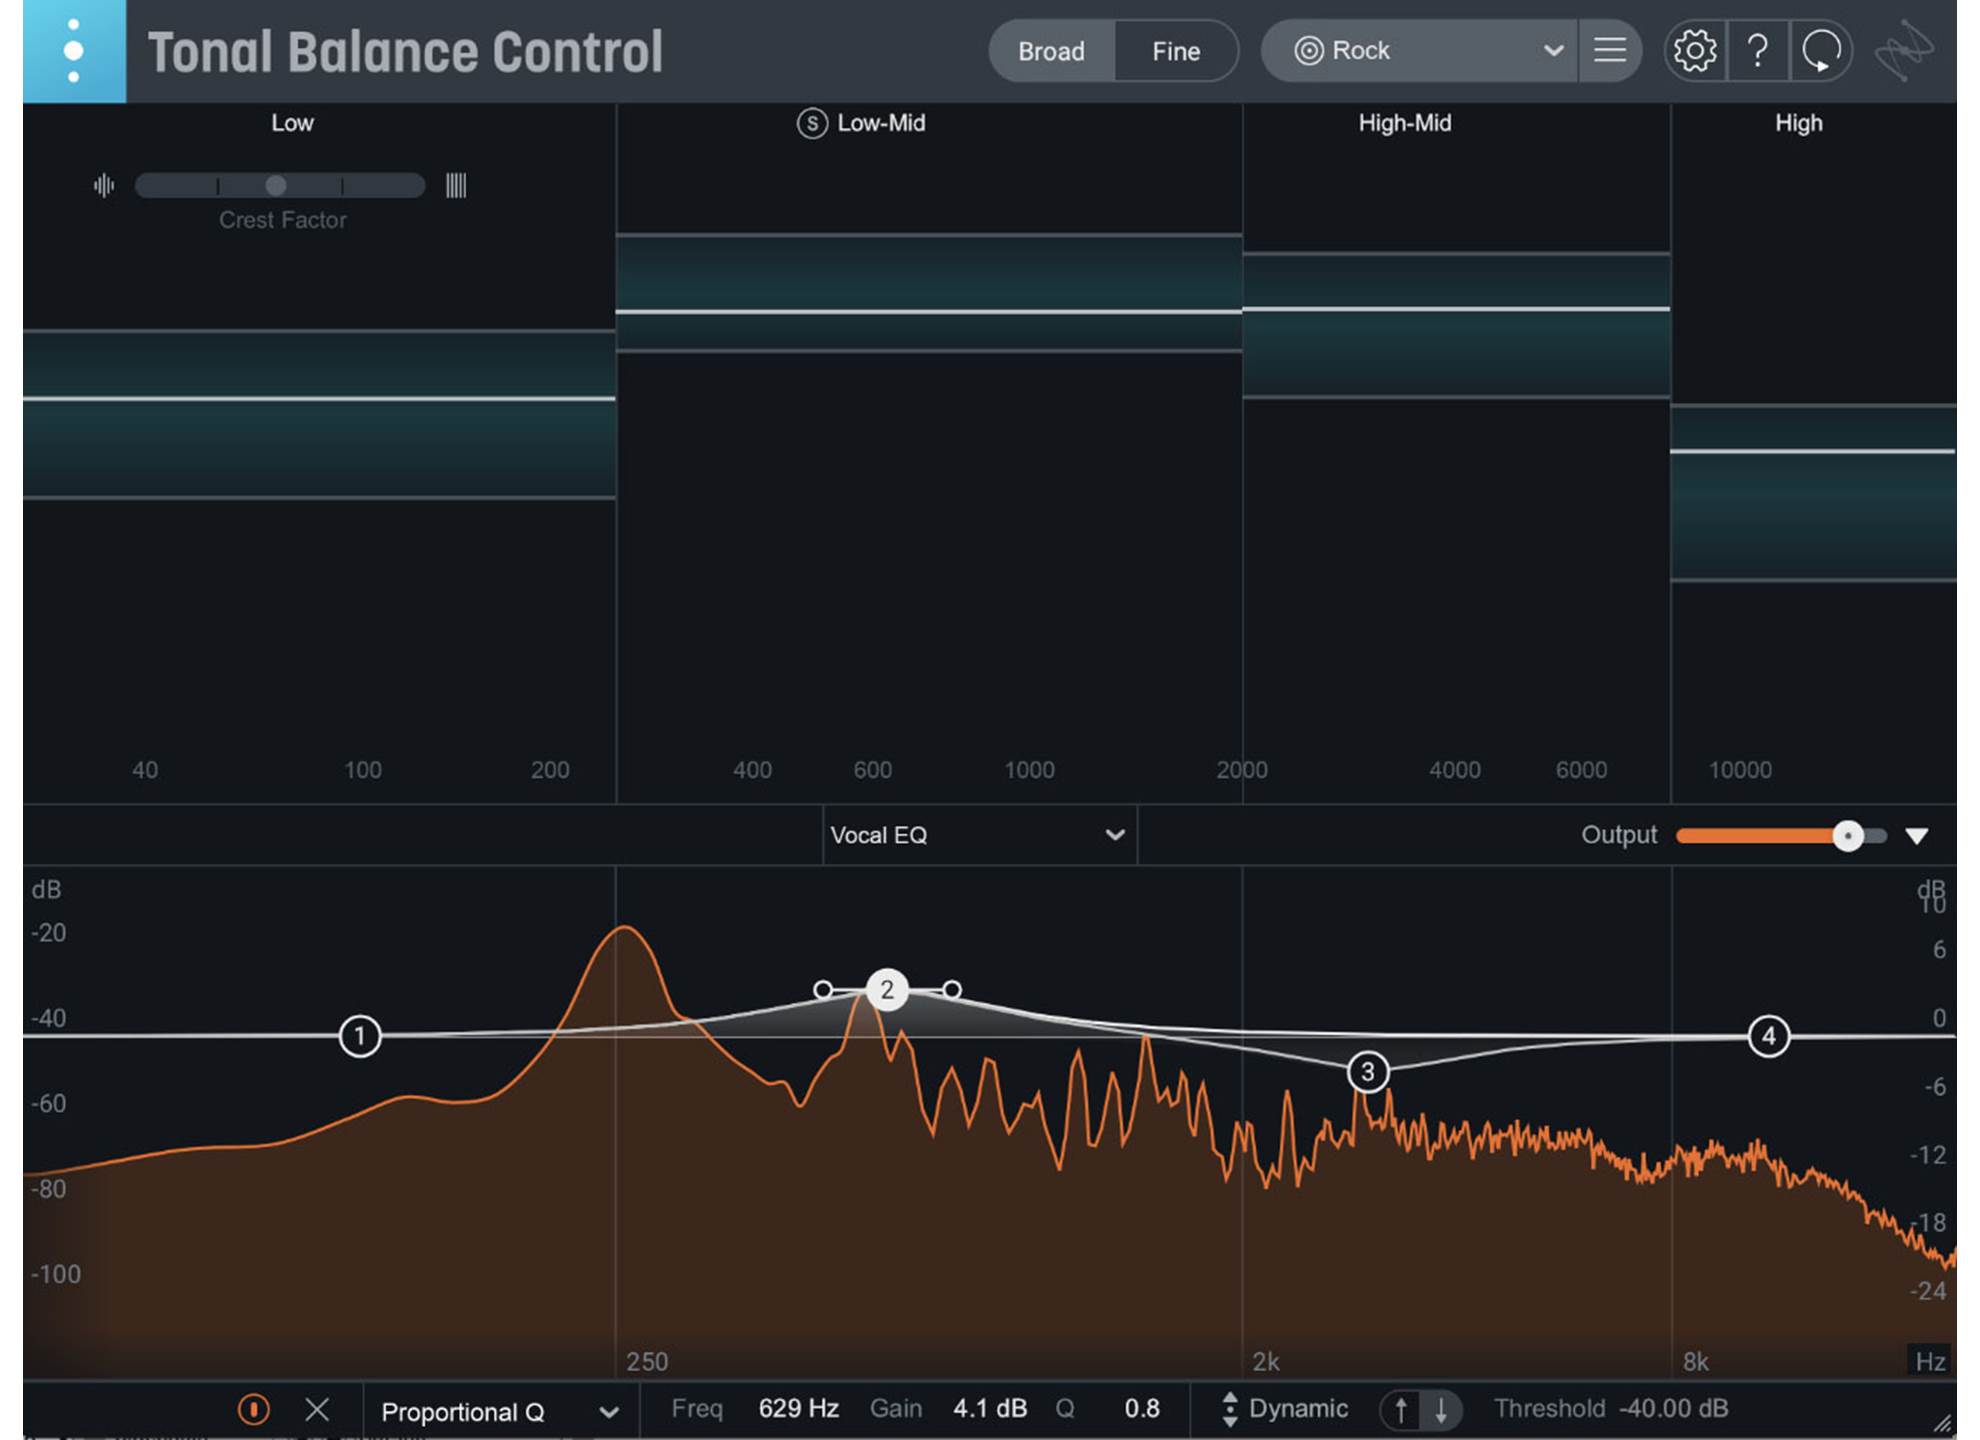 iZotope Tonal Balance Control 2.7.0 instaling